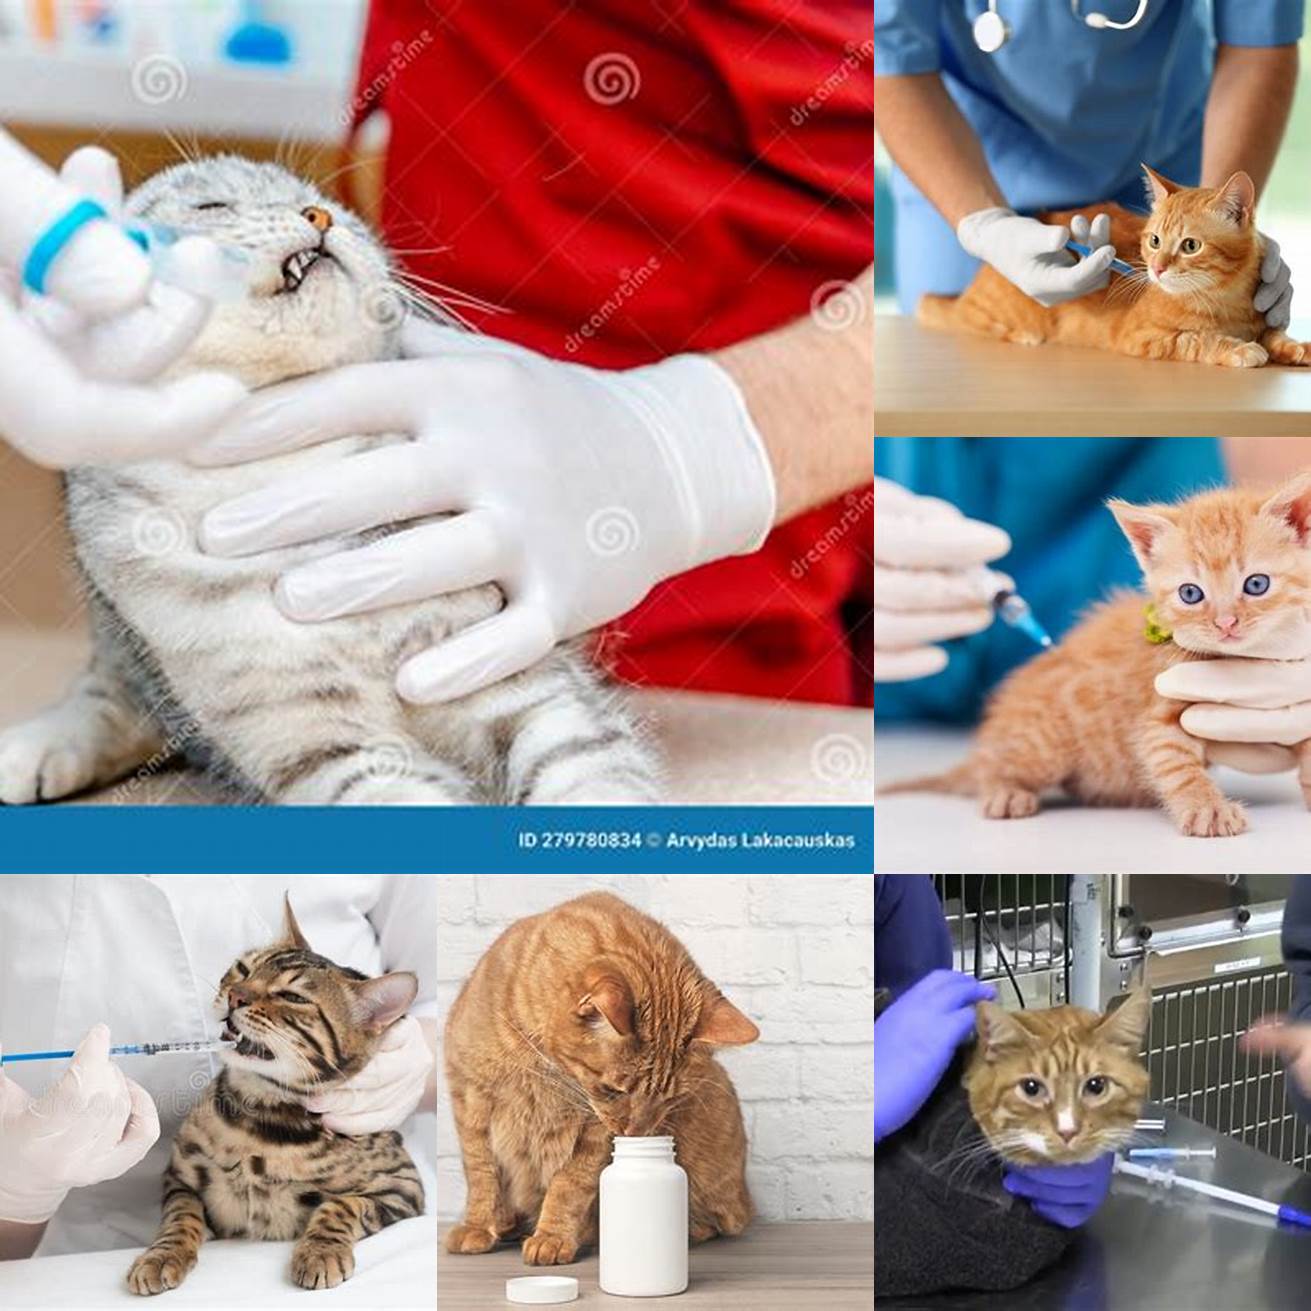 Cat receiving medication from a vet